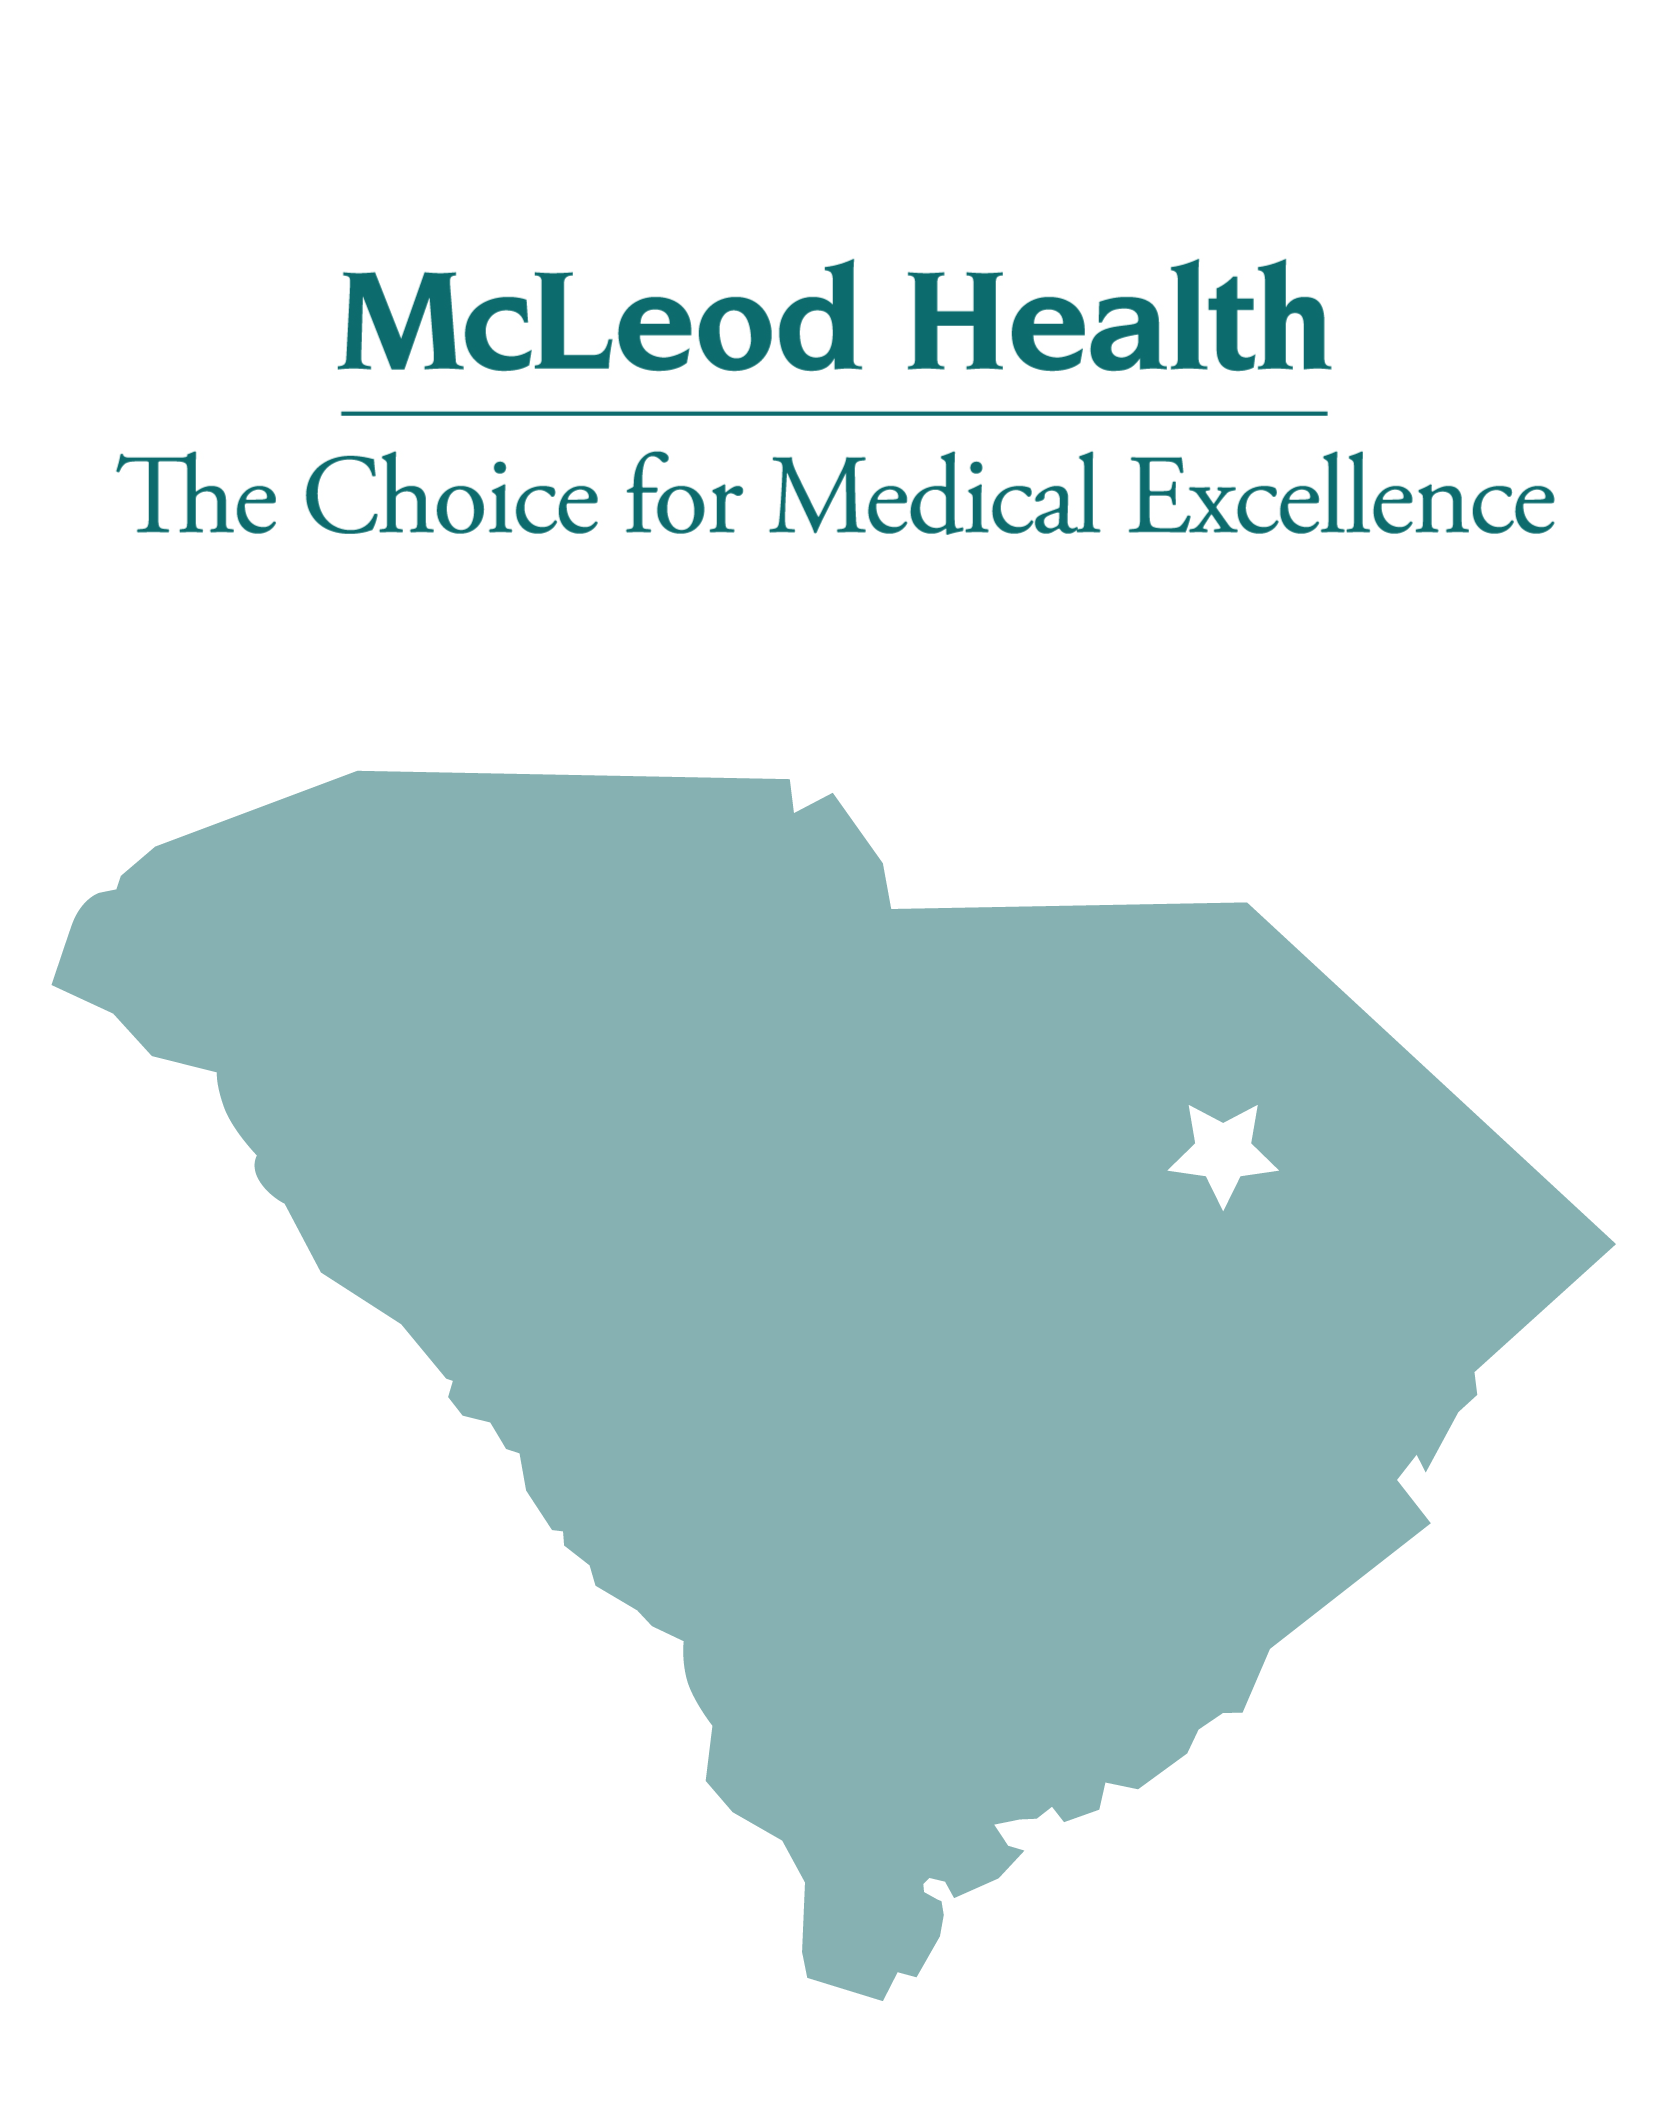 McLeod Health in Florence, South Carolina